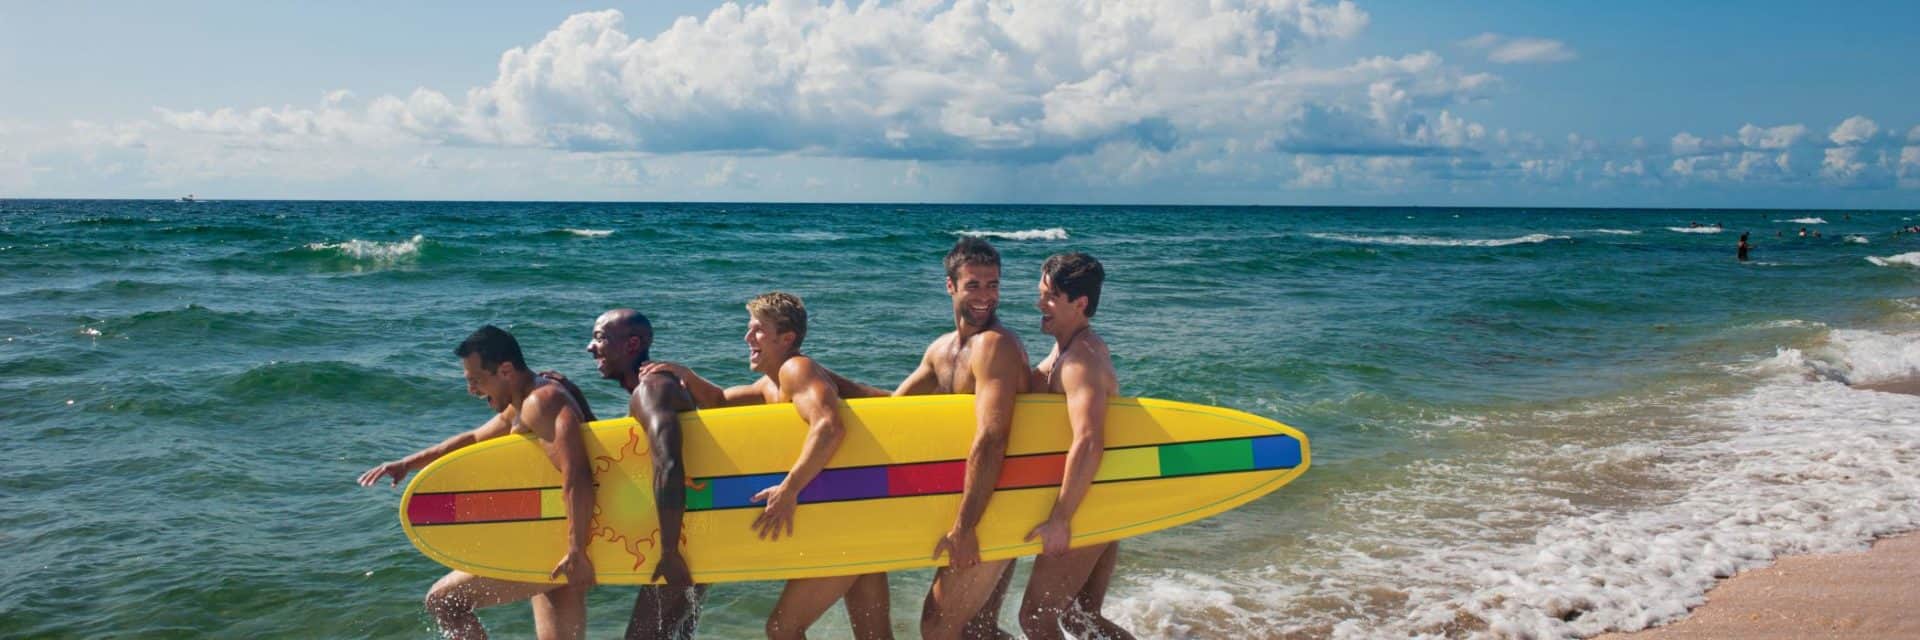 Fort Lauderdale homoseksuelle ferier